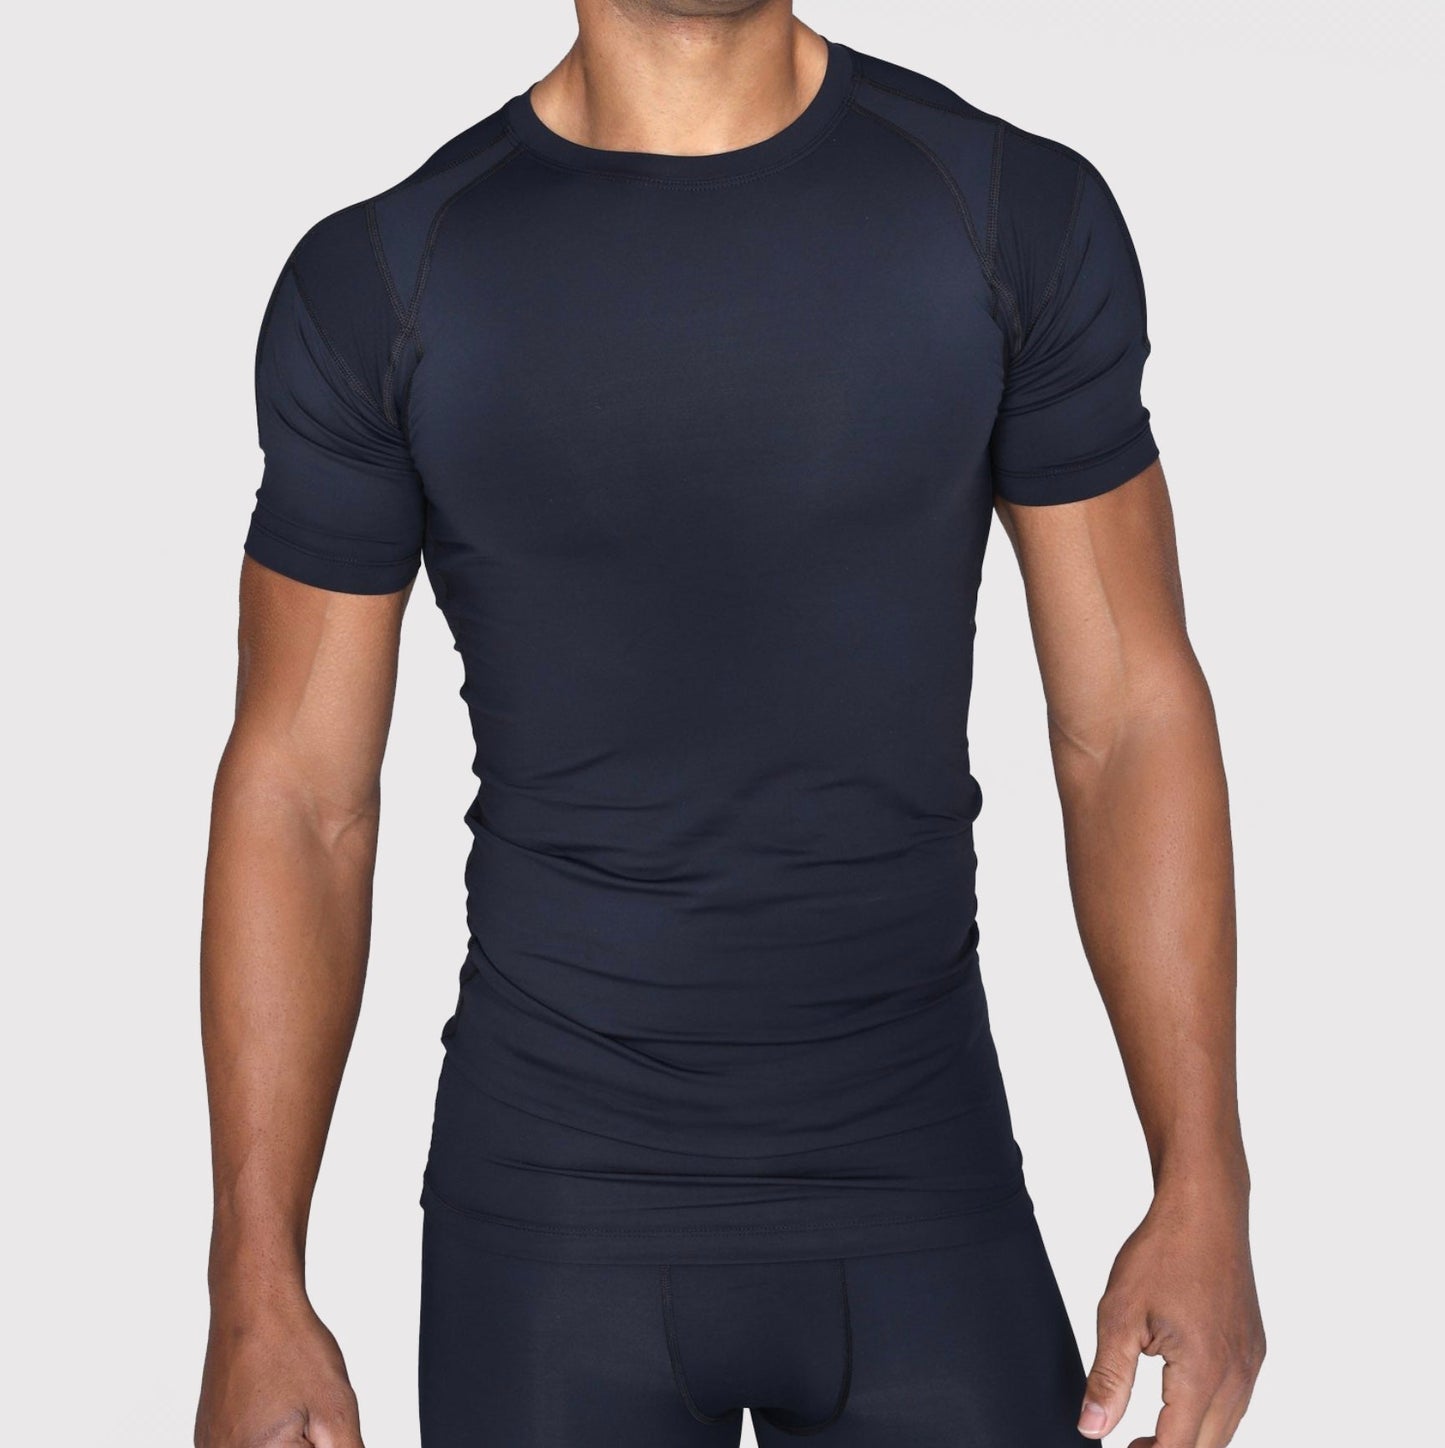  Yuerlian Men's Compression Shirts Short Sleeve Cool